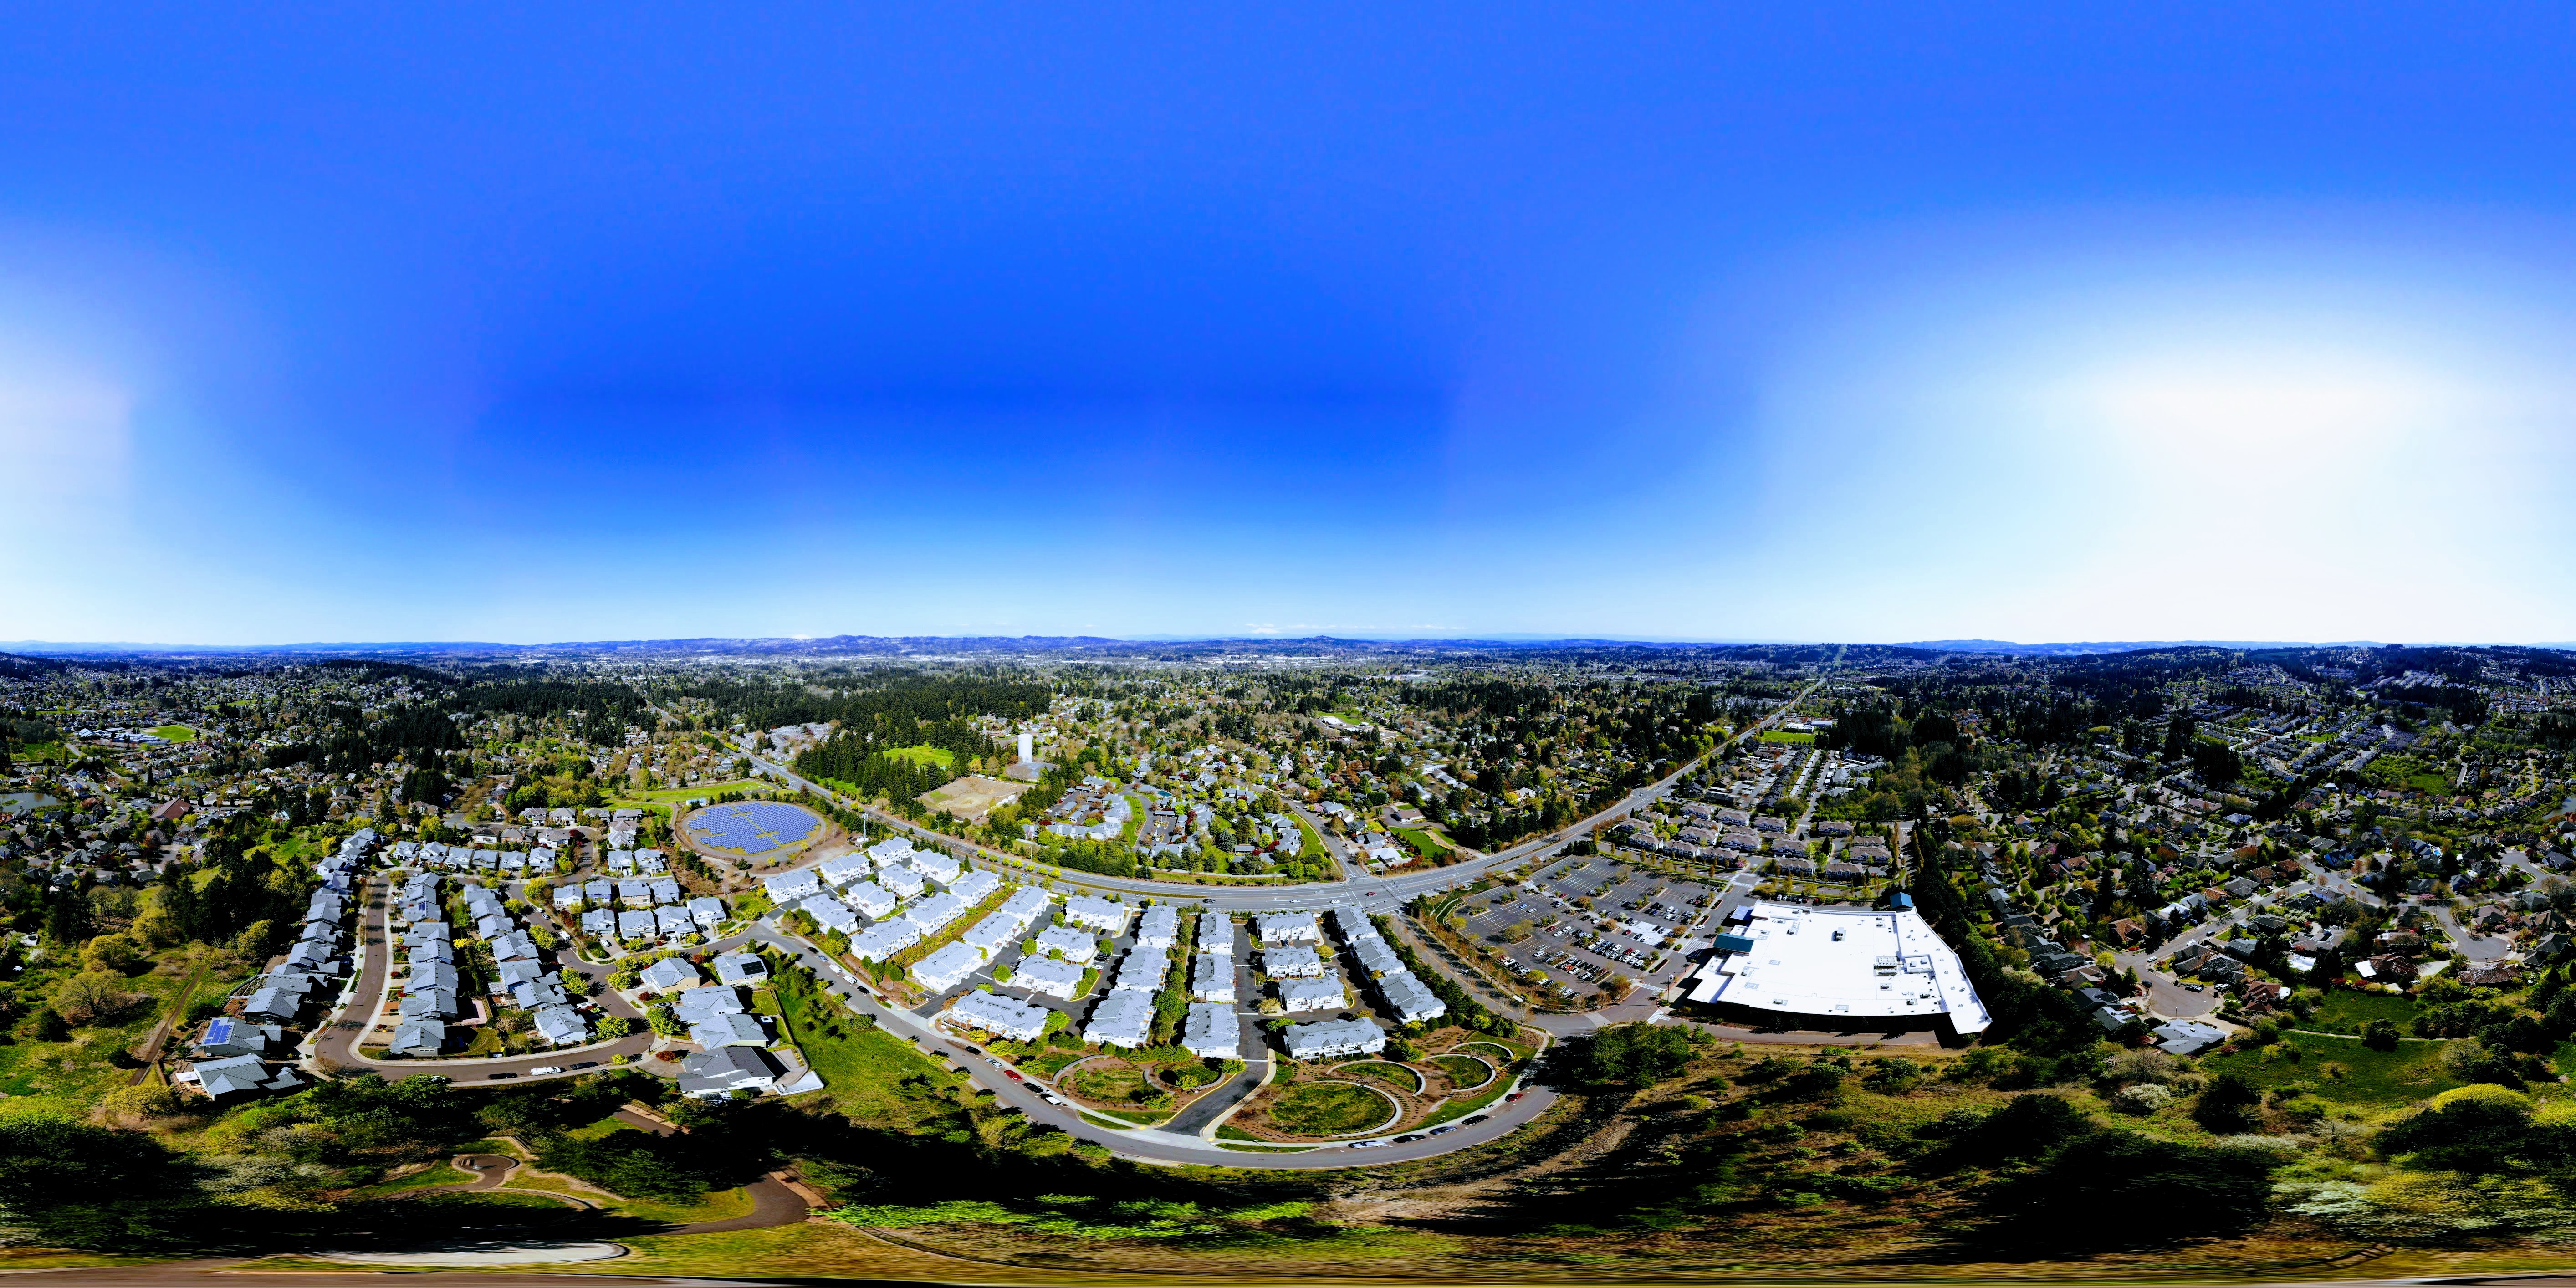 360 sphere panoramic image shot on DJI Mavic Air